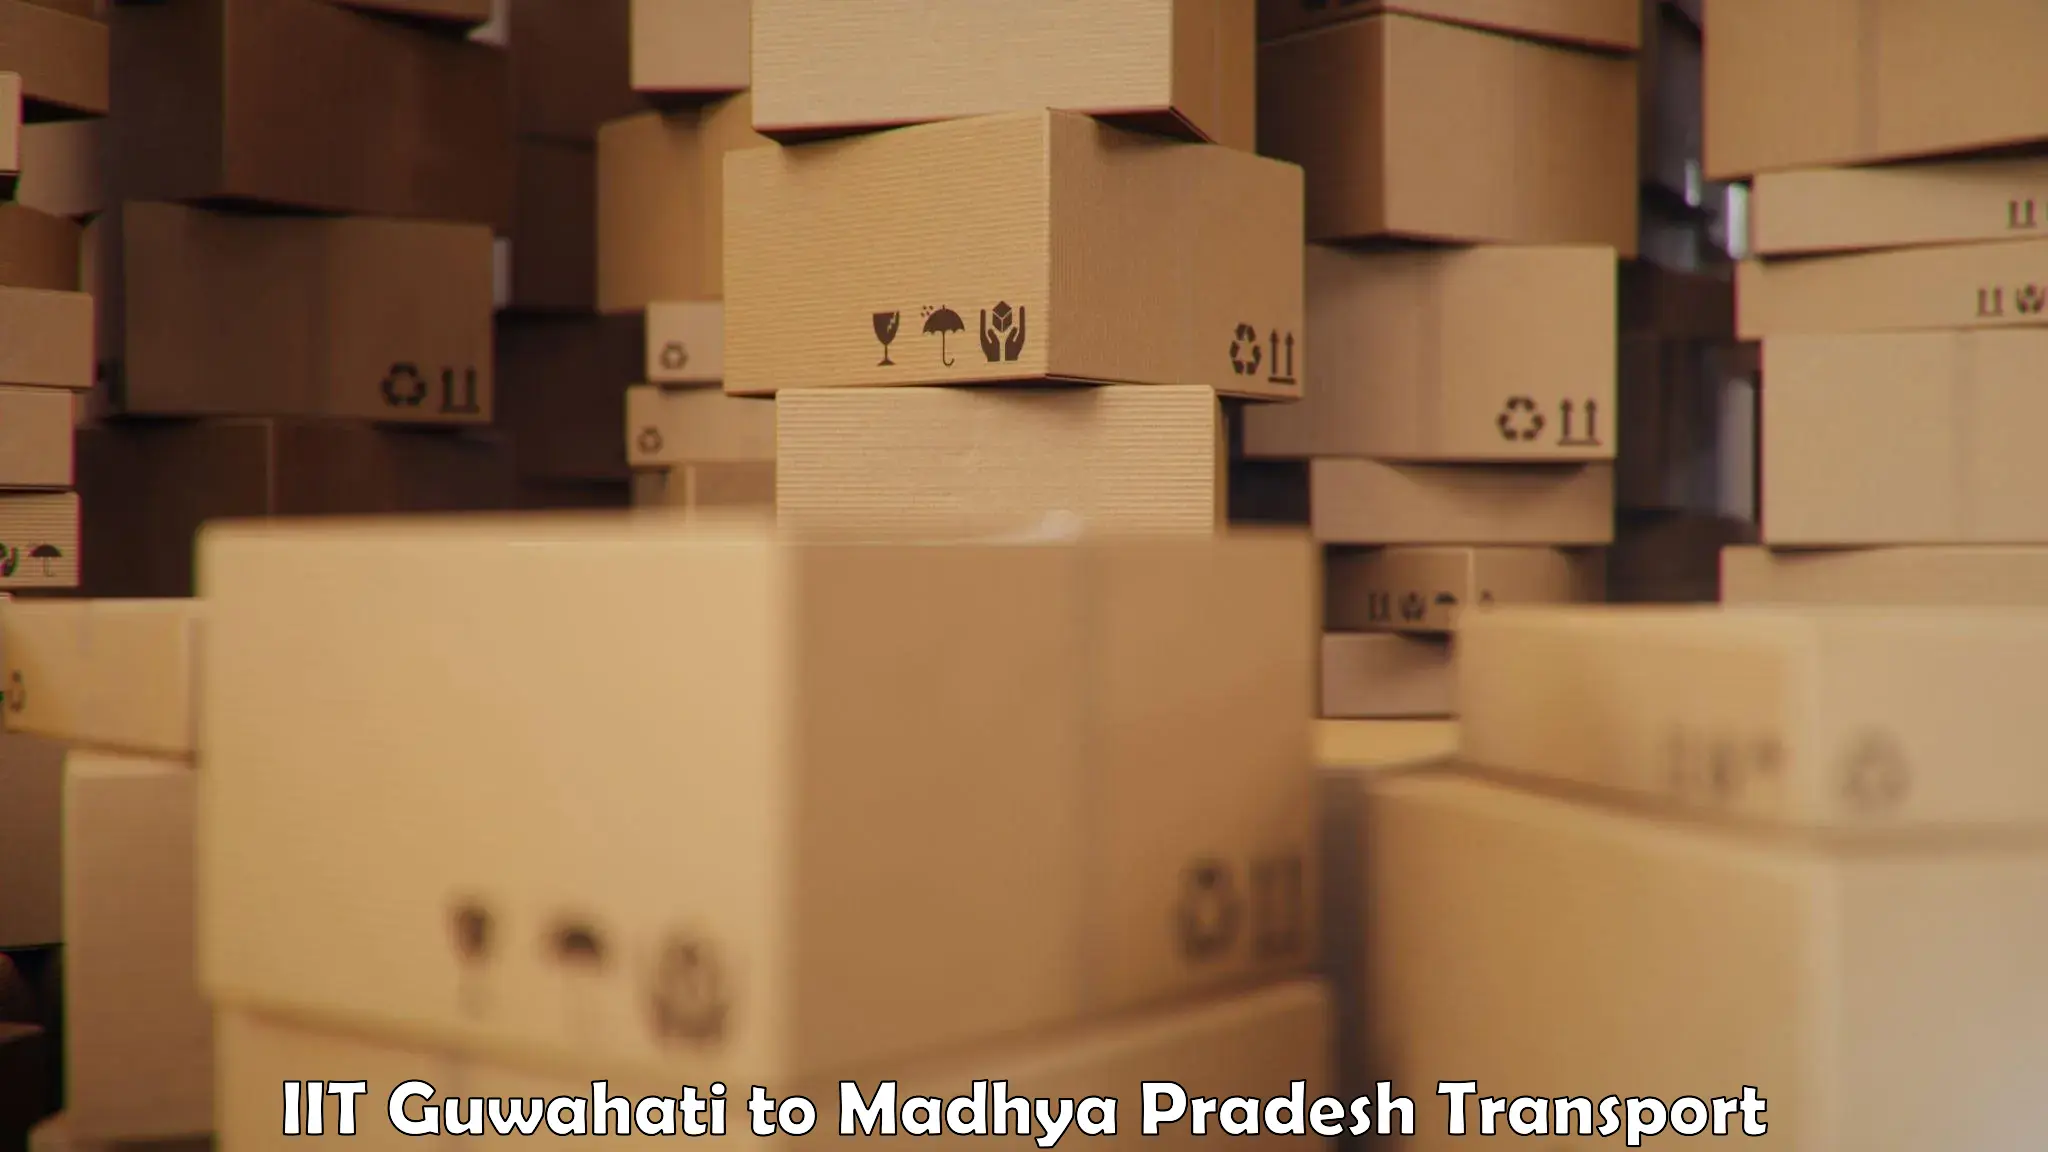 Shipping partner IIT Guwahati to Jabalpur